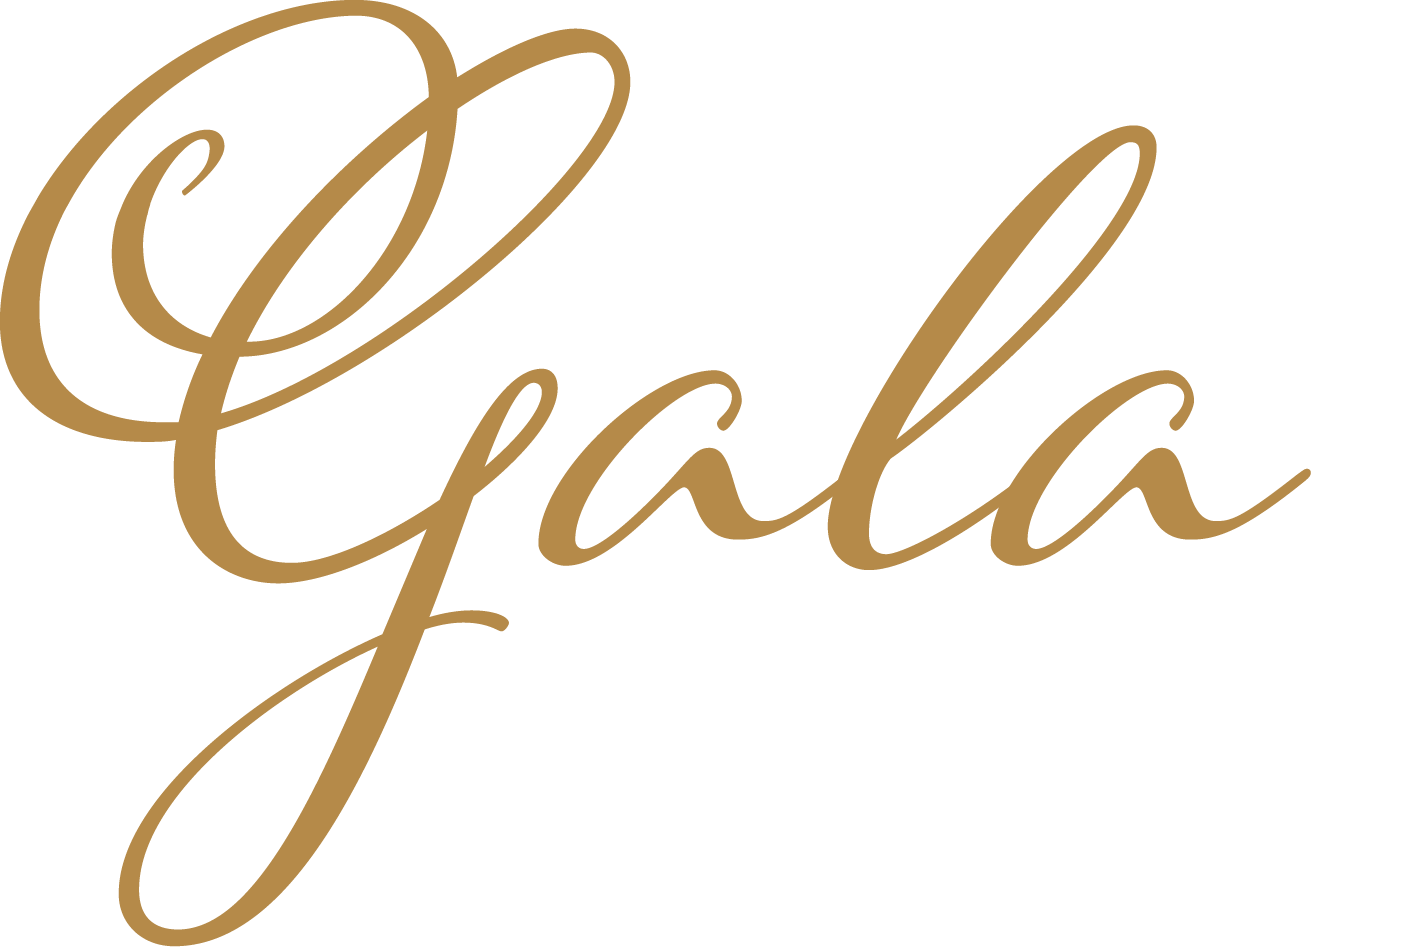 Gala: 10th Anniversary